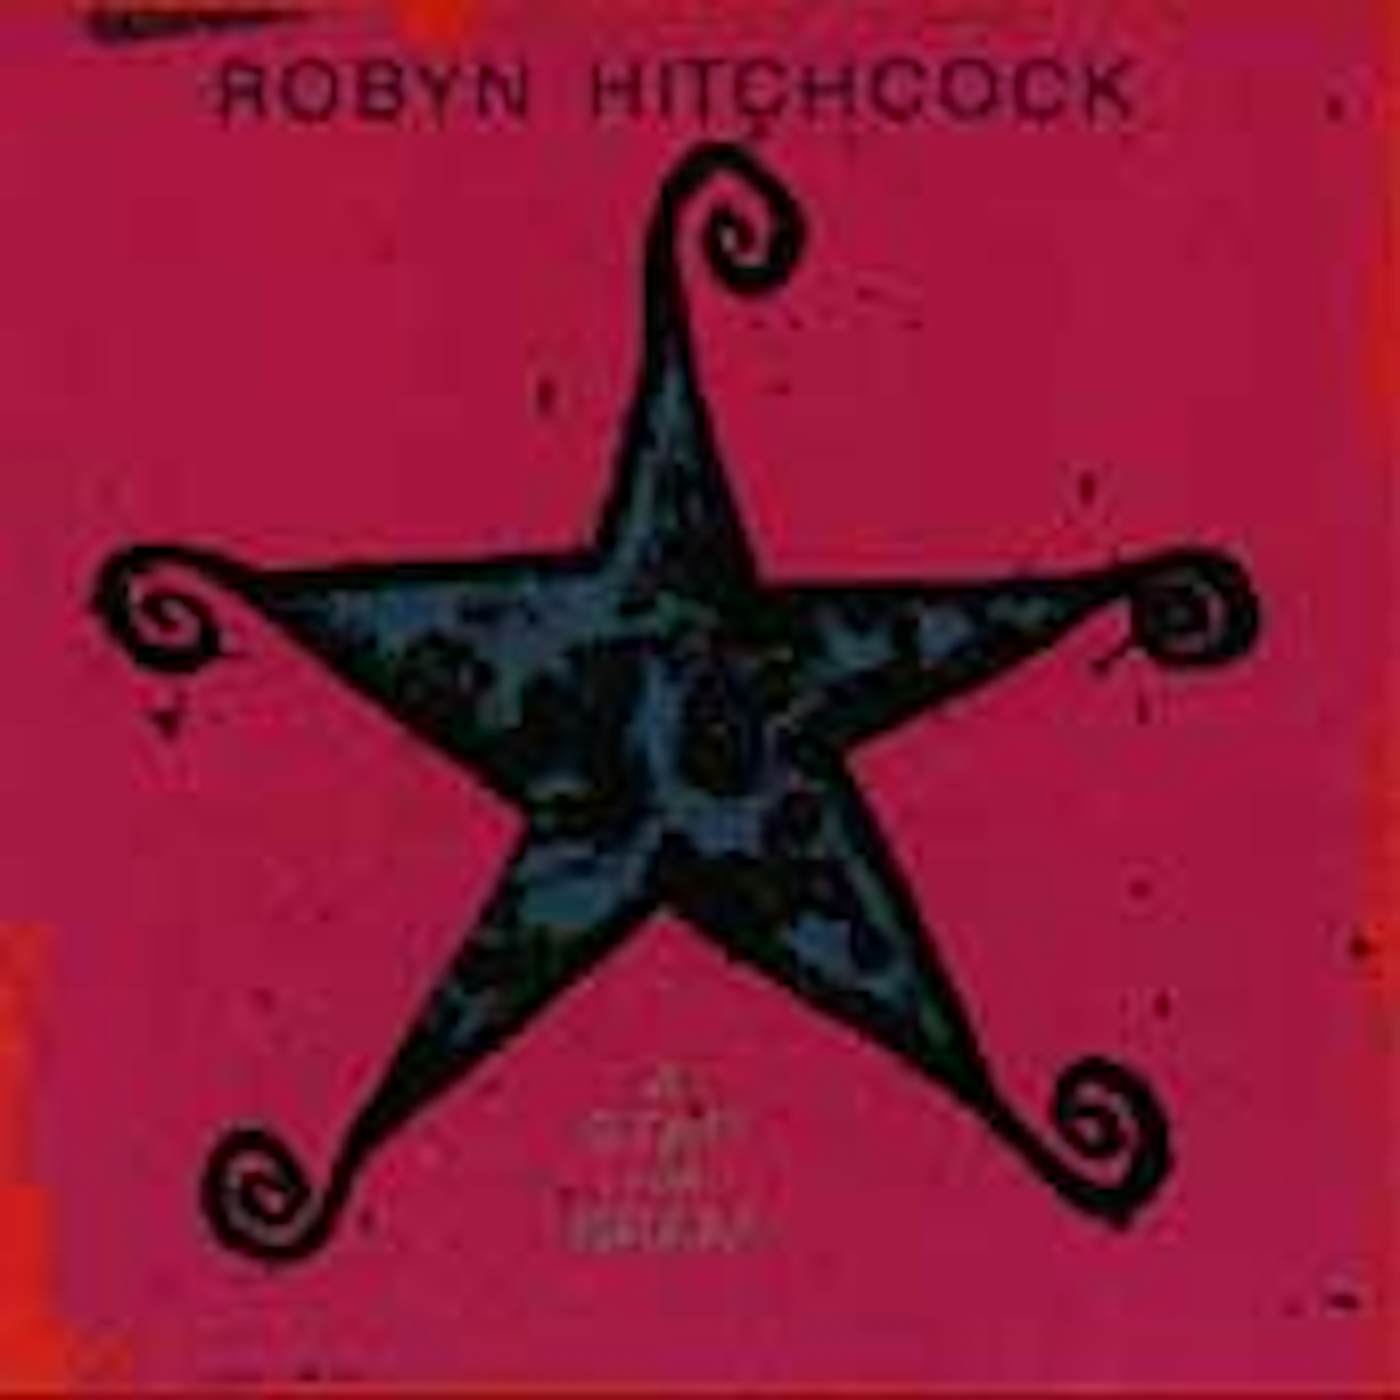 Robyn Hitchcock STAR FOR BRAM CD